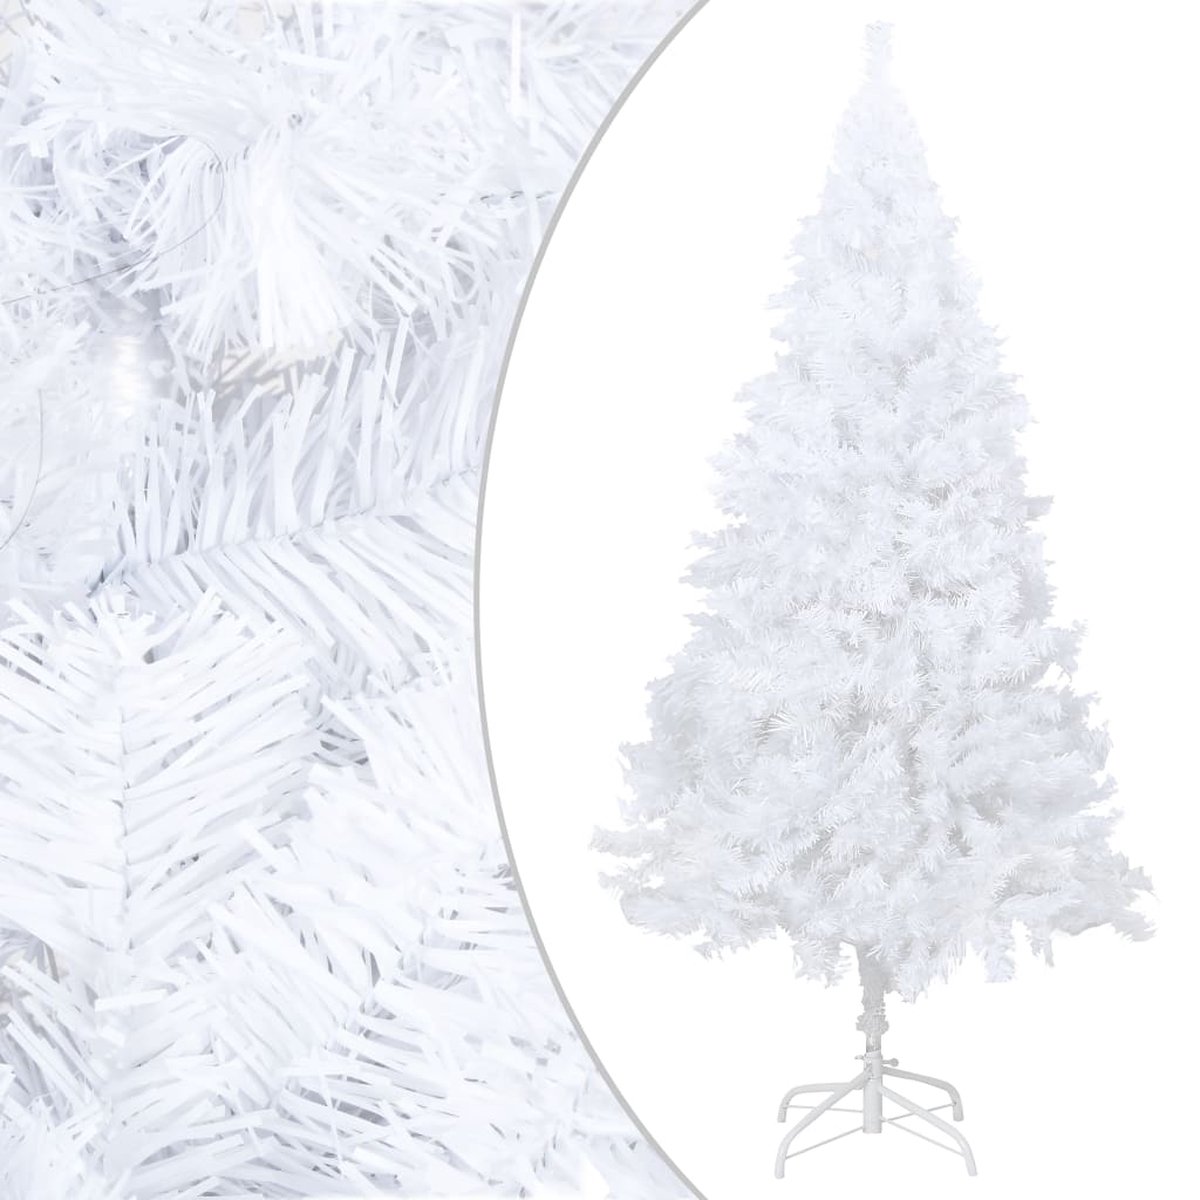 VidaLife Kunstkerstboom met dikke takken 180 cm PVC wit